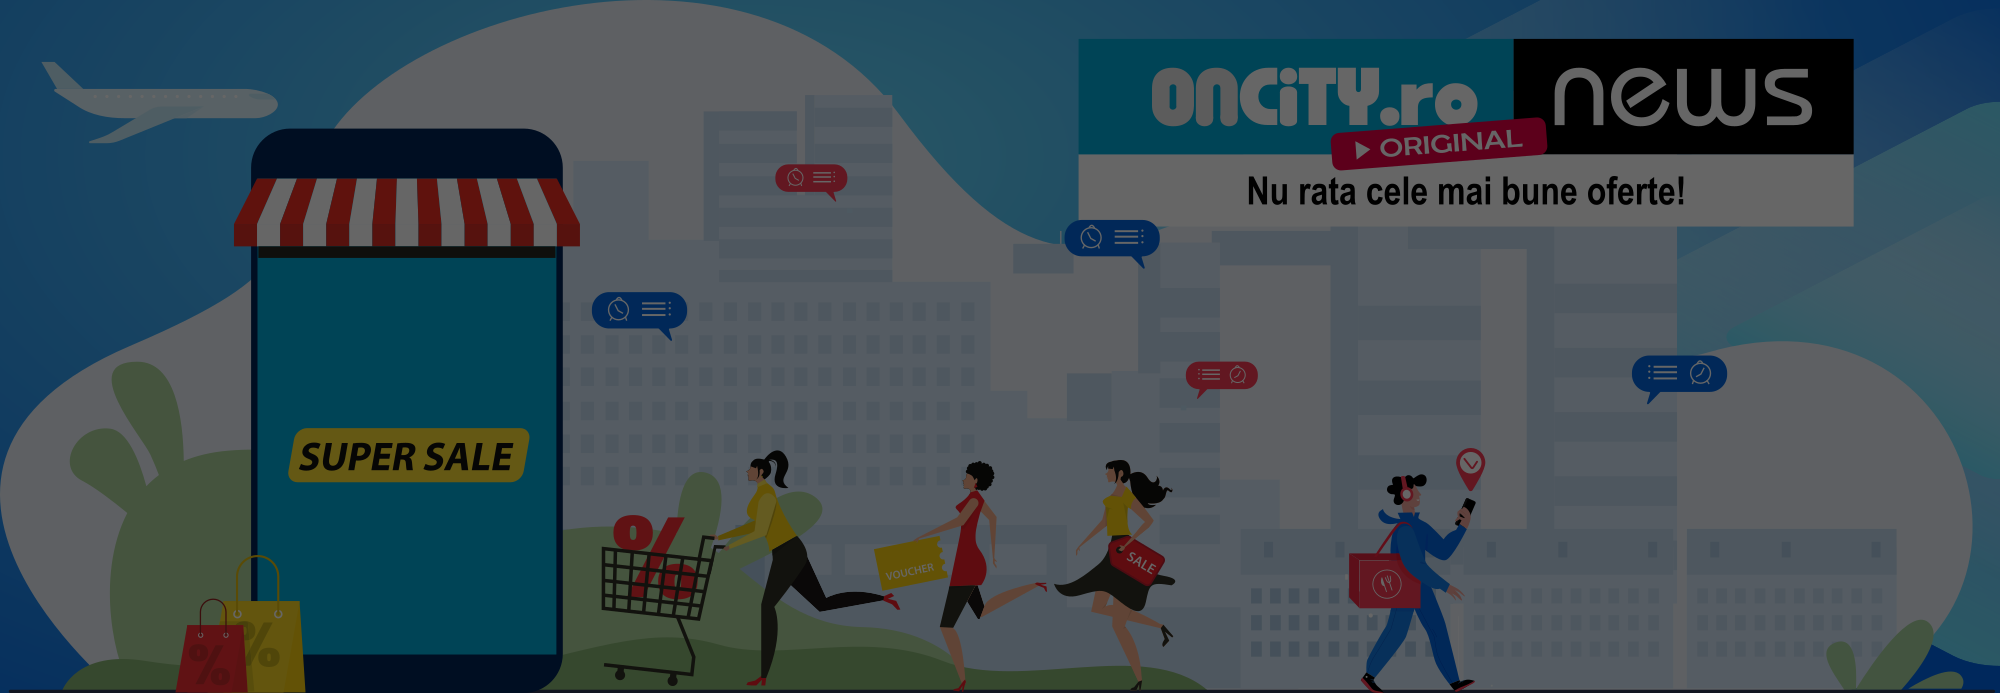 onCity.ro - Oferte personalizate, promotii si campanii